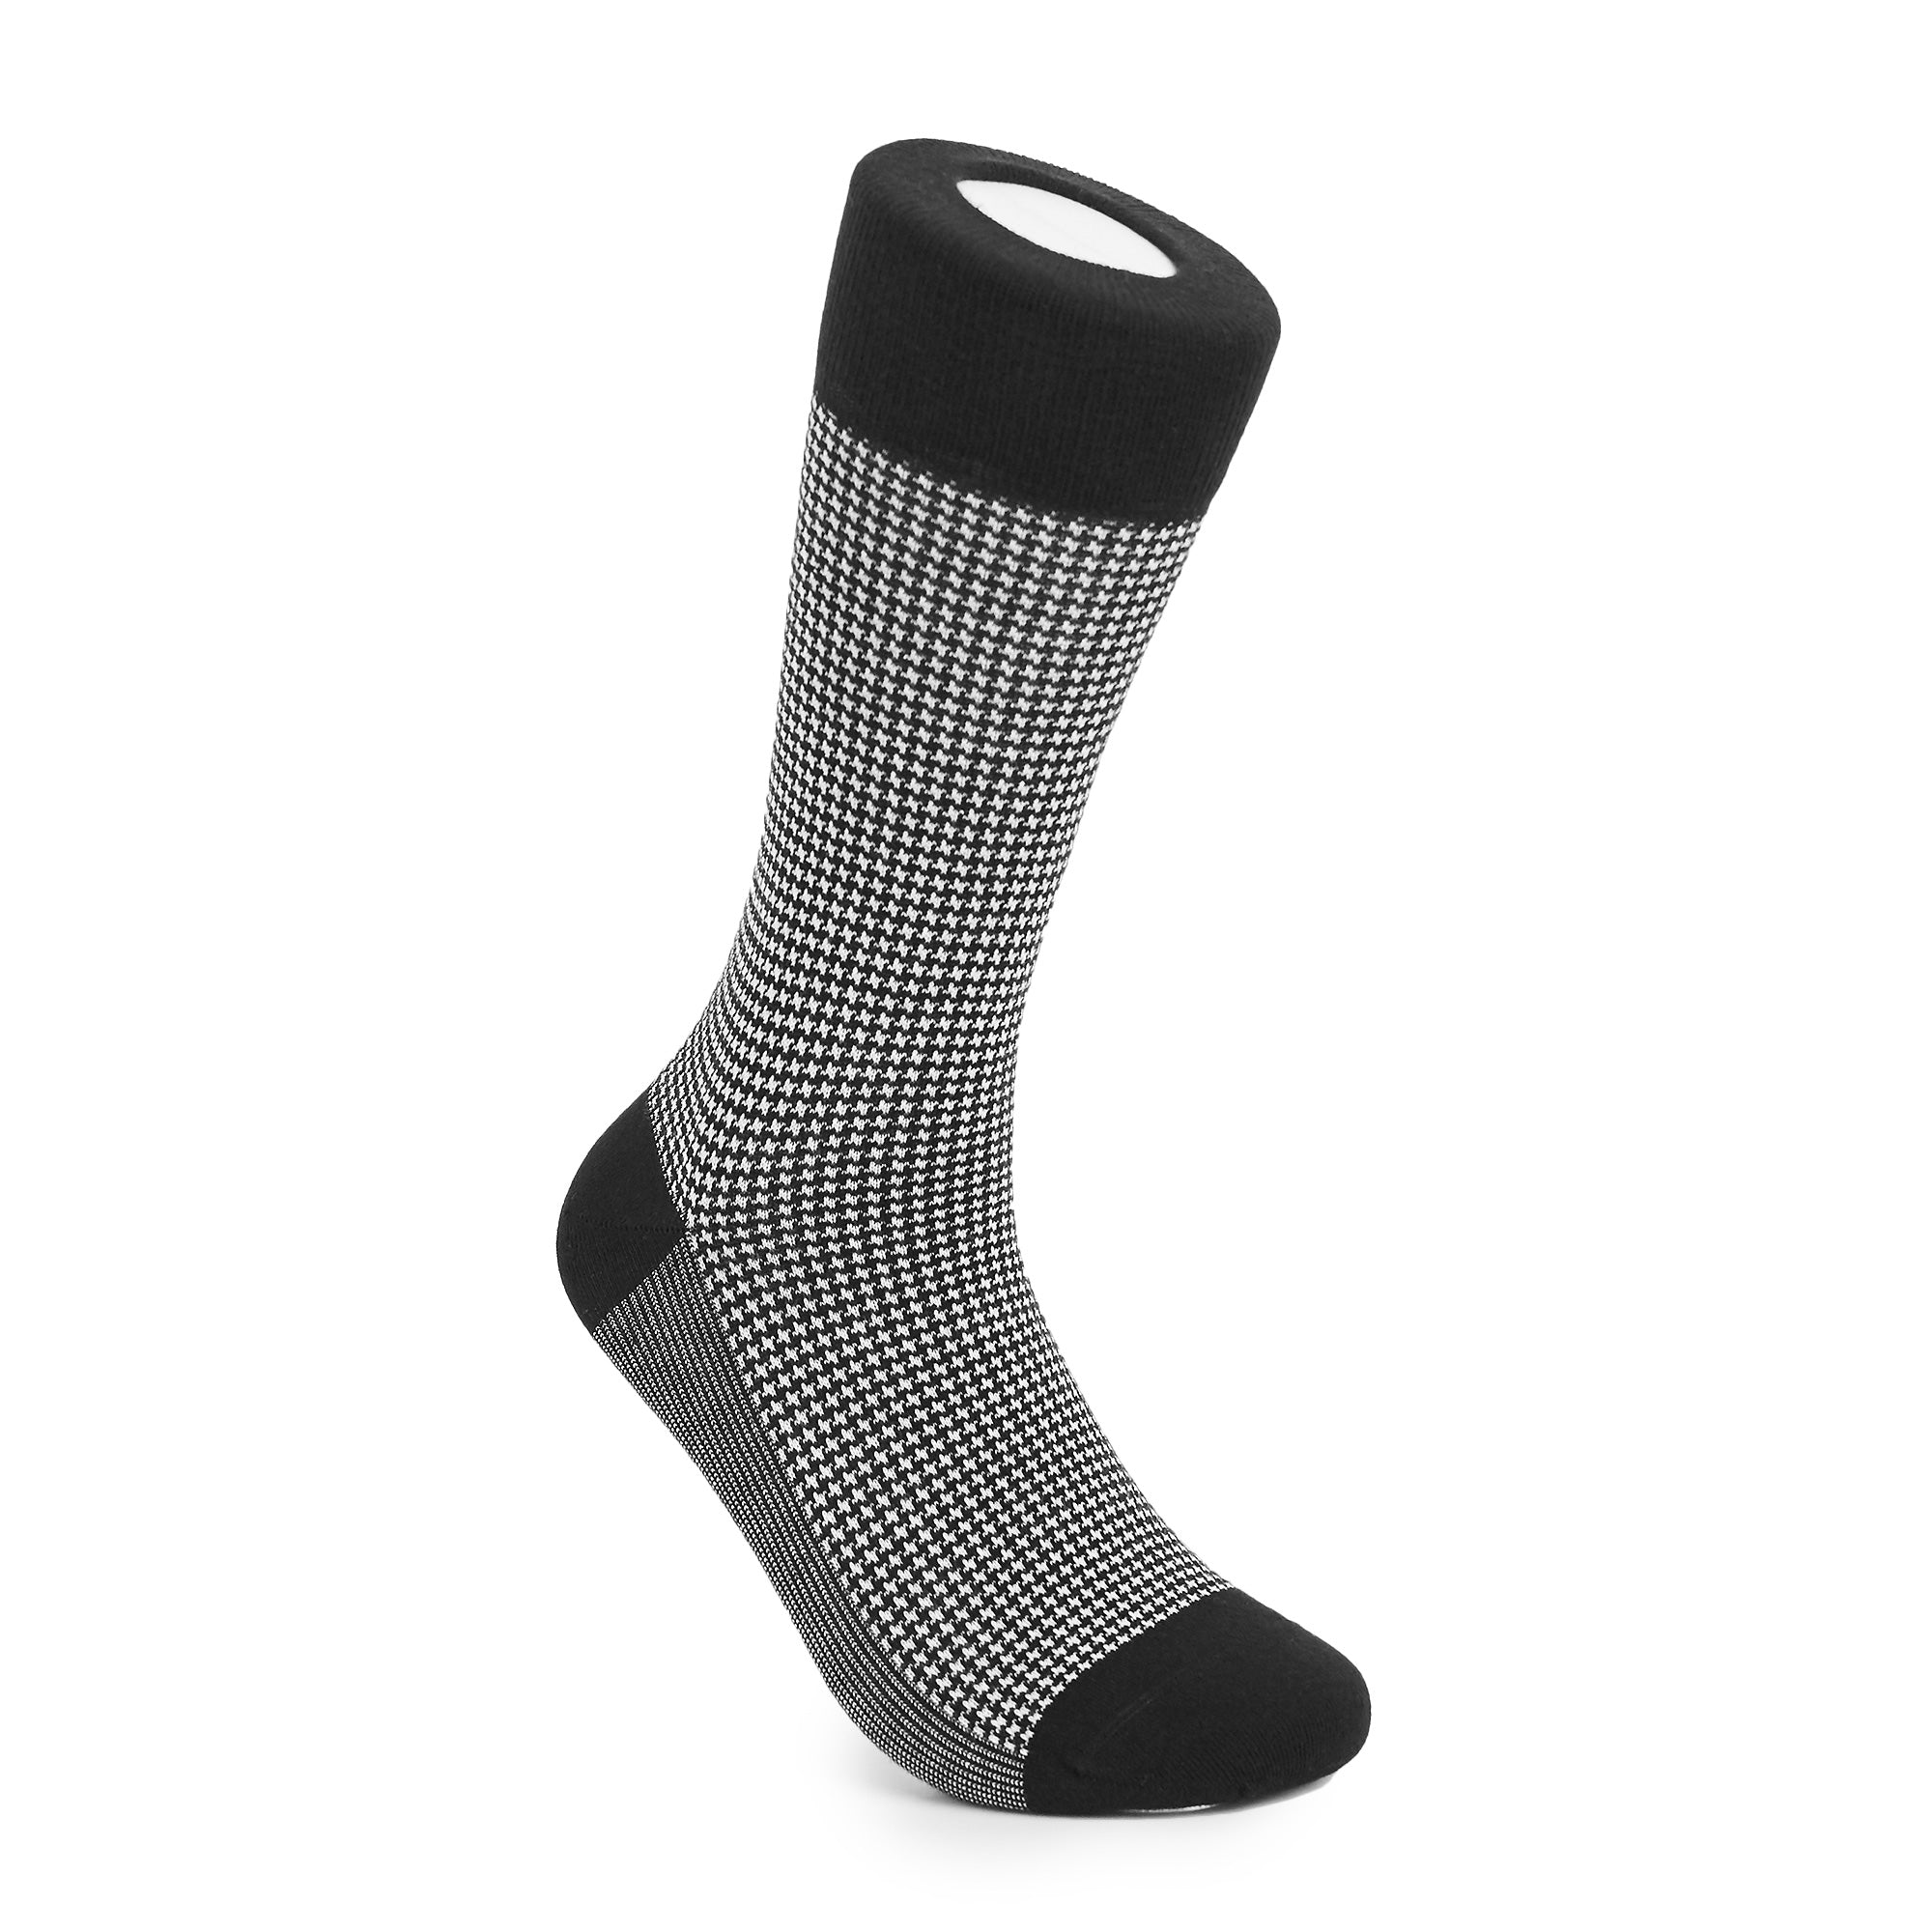 Houndstooth - Black/White - Votta Socks